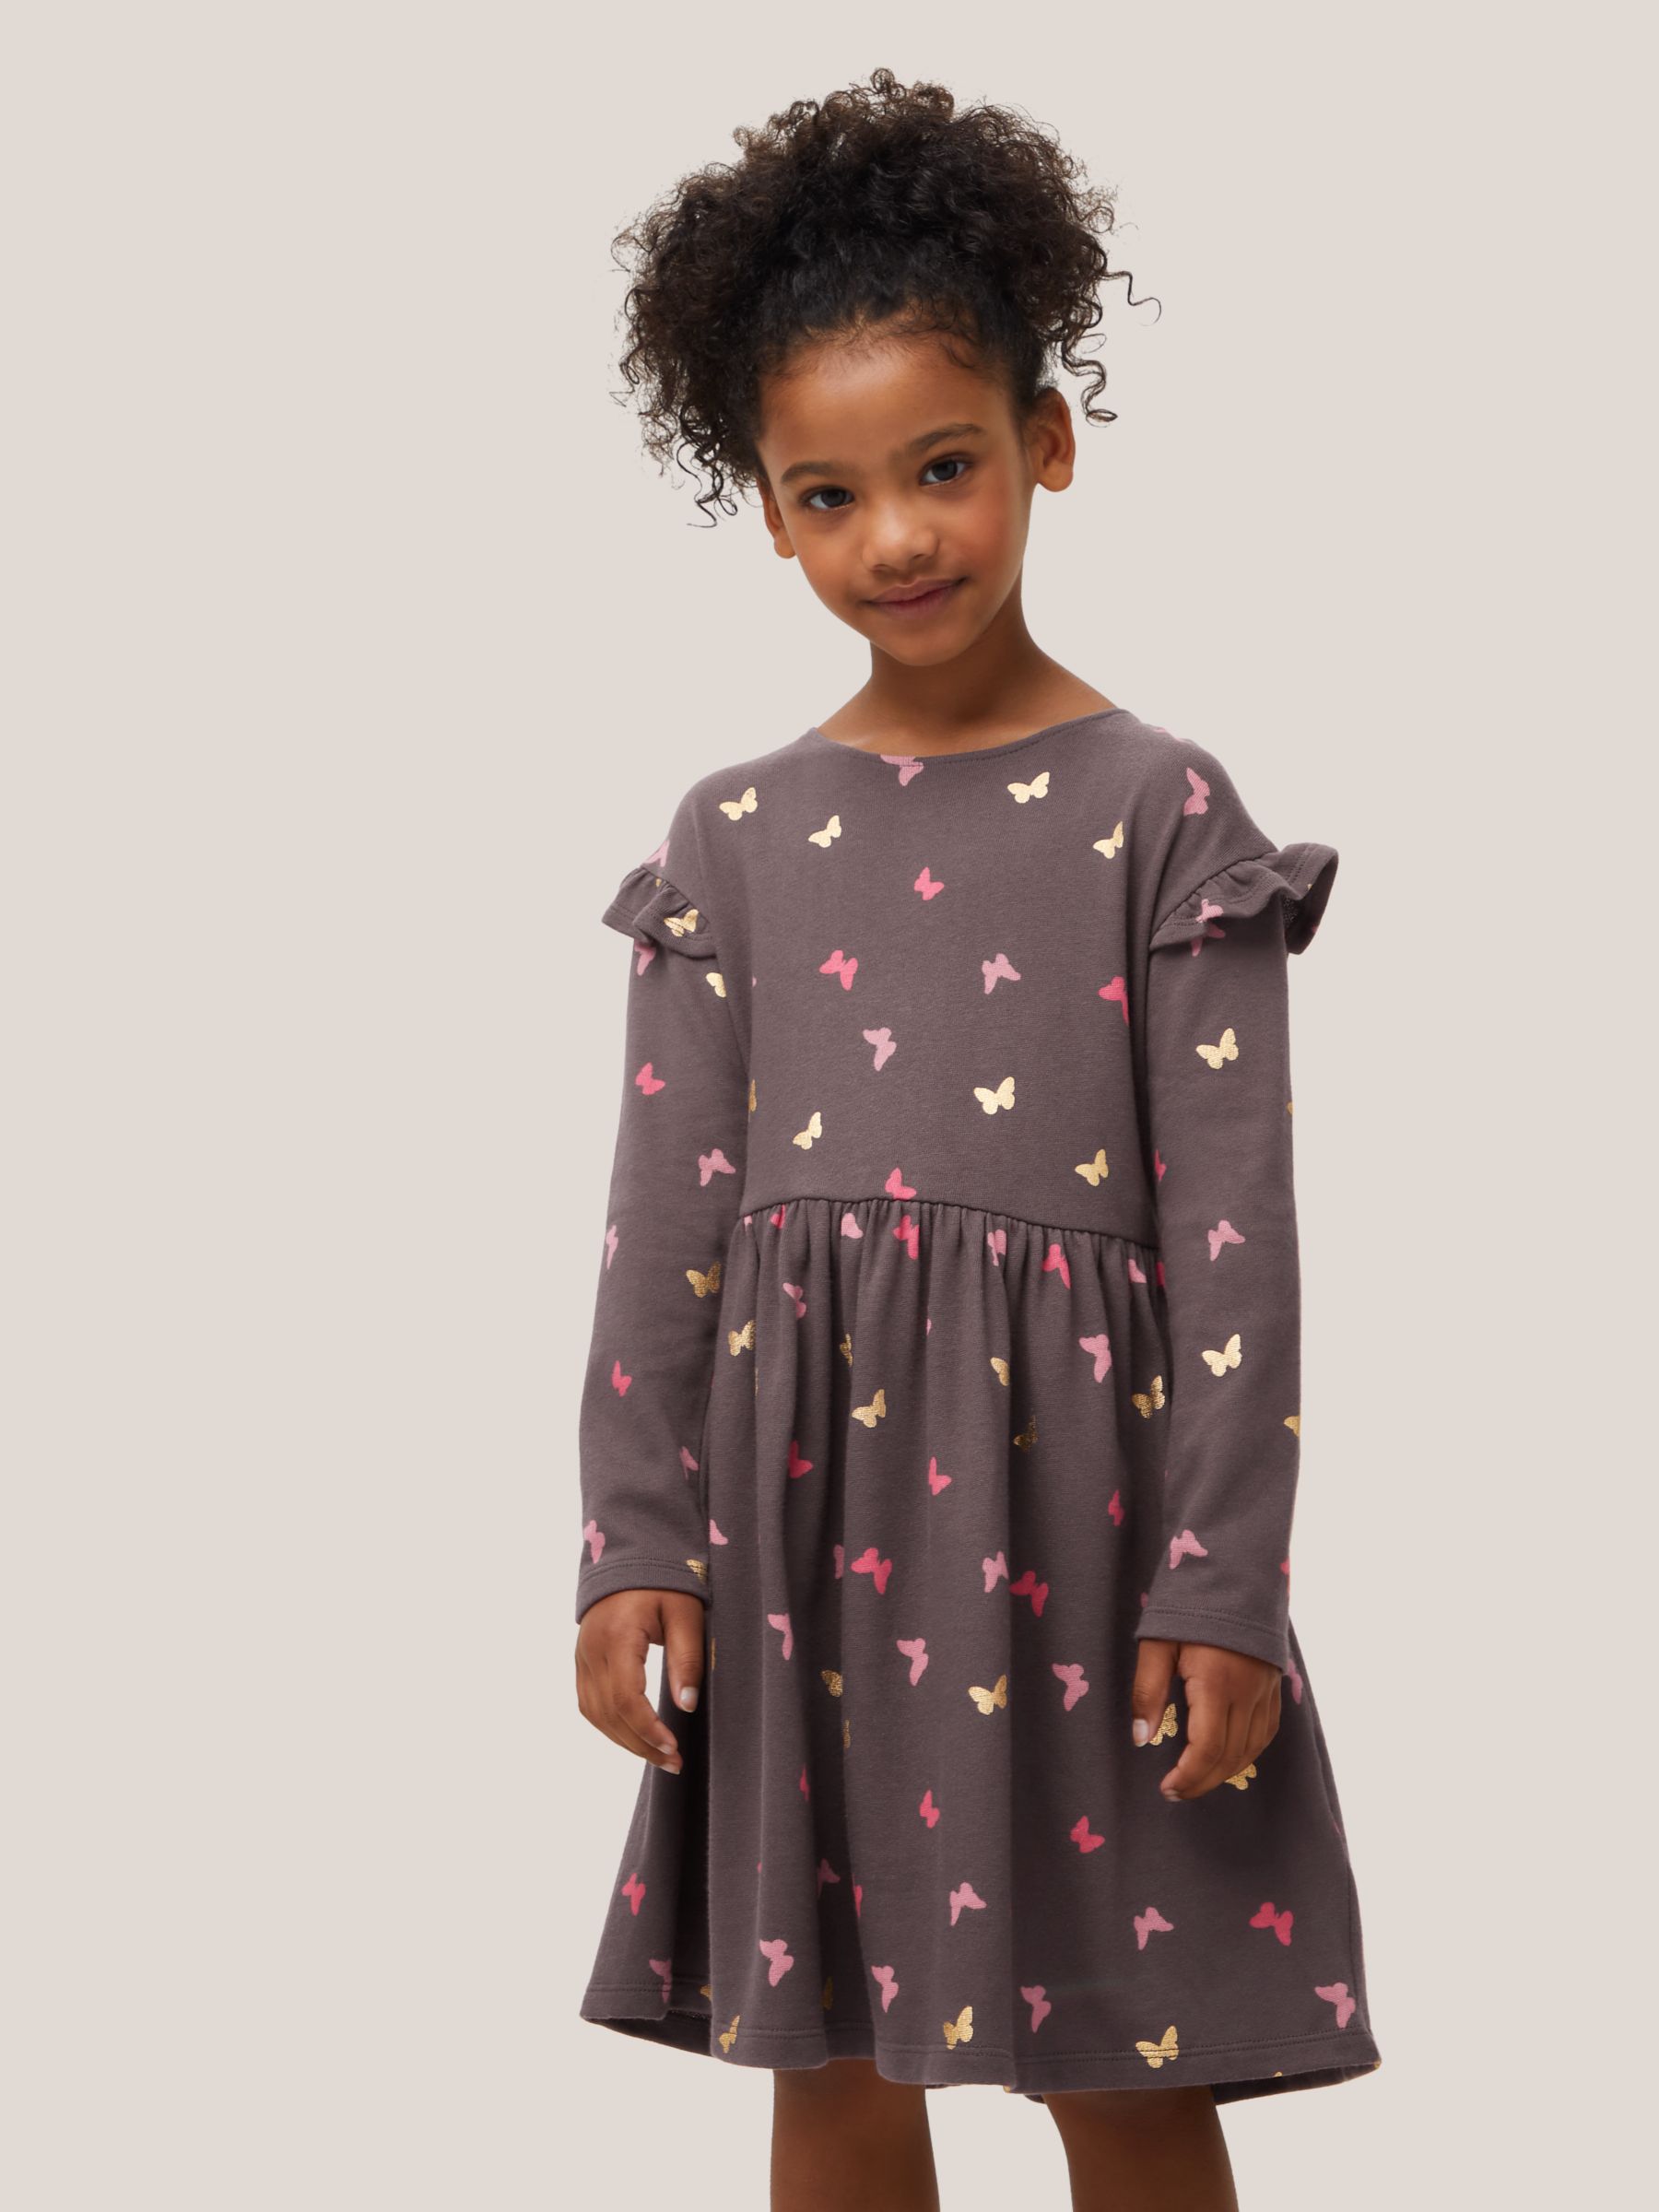 John Lewis Kids' Butterfly Sweater Dress, Charcoal